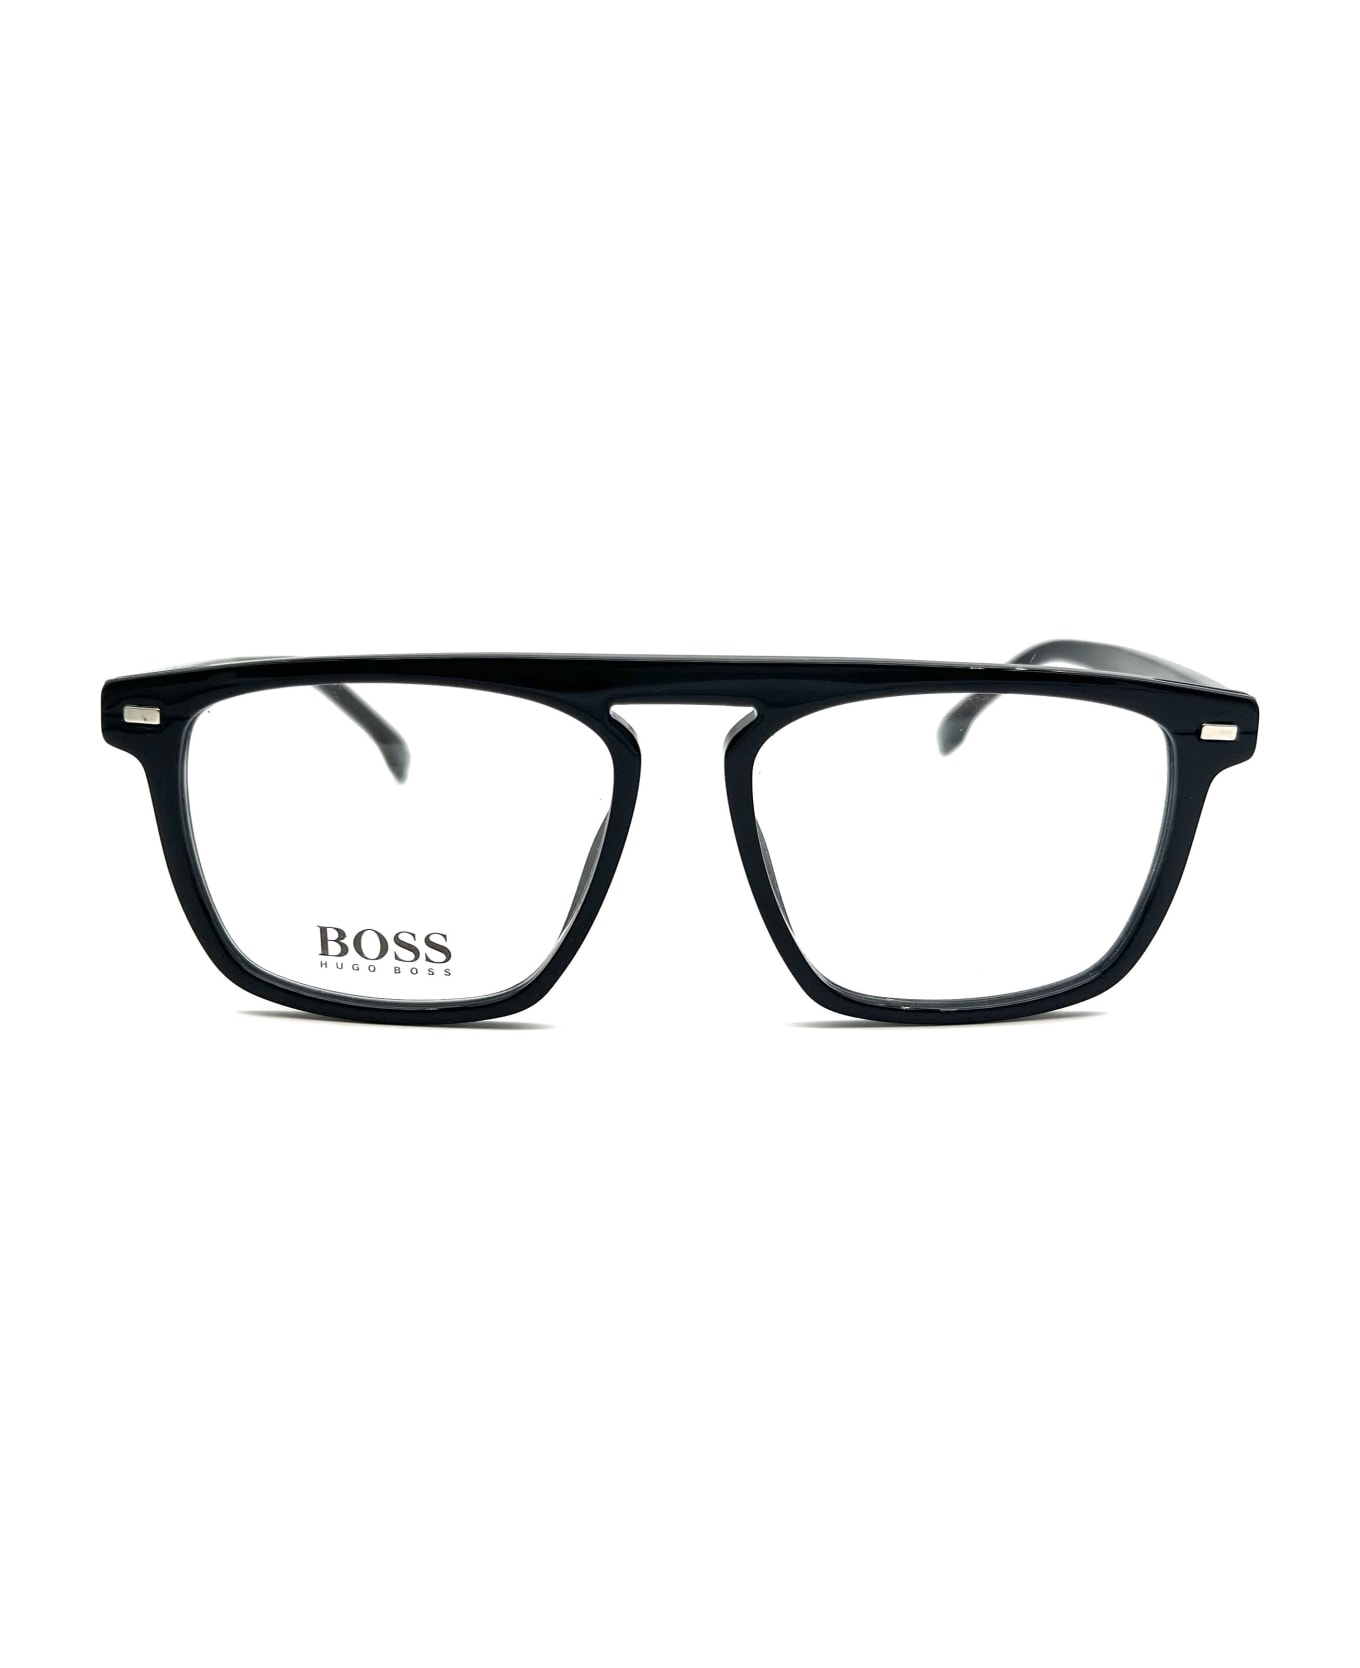 Hugo Boss BOSS 1128 Eyewear - Black アイウェア